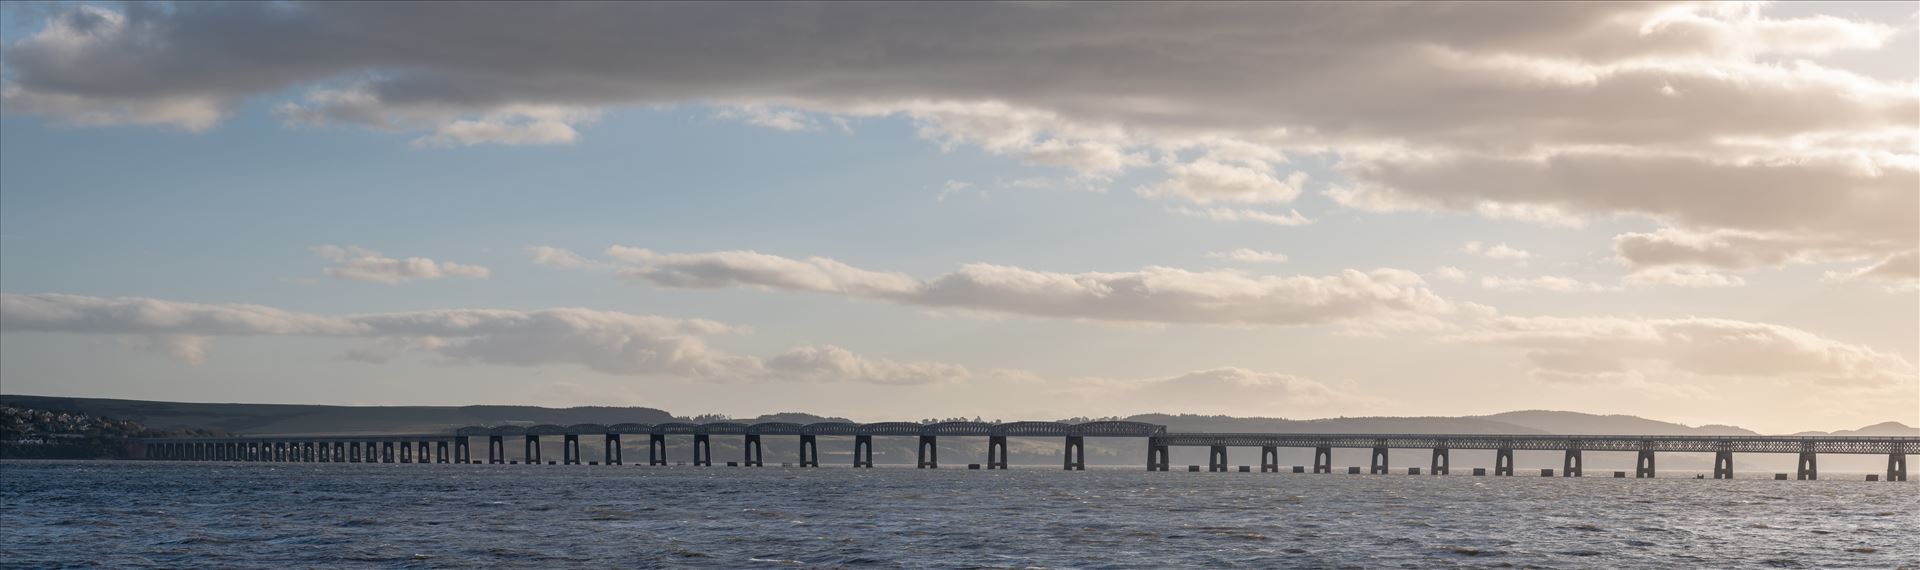 Panoramic of Tay Rail Bridge, Dundee, Scotland. -  by Graham Dobson Photography